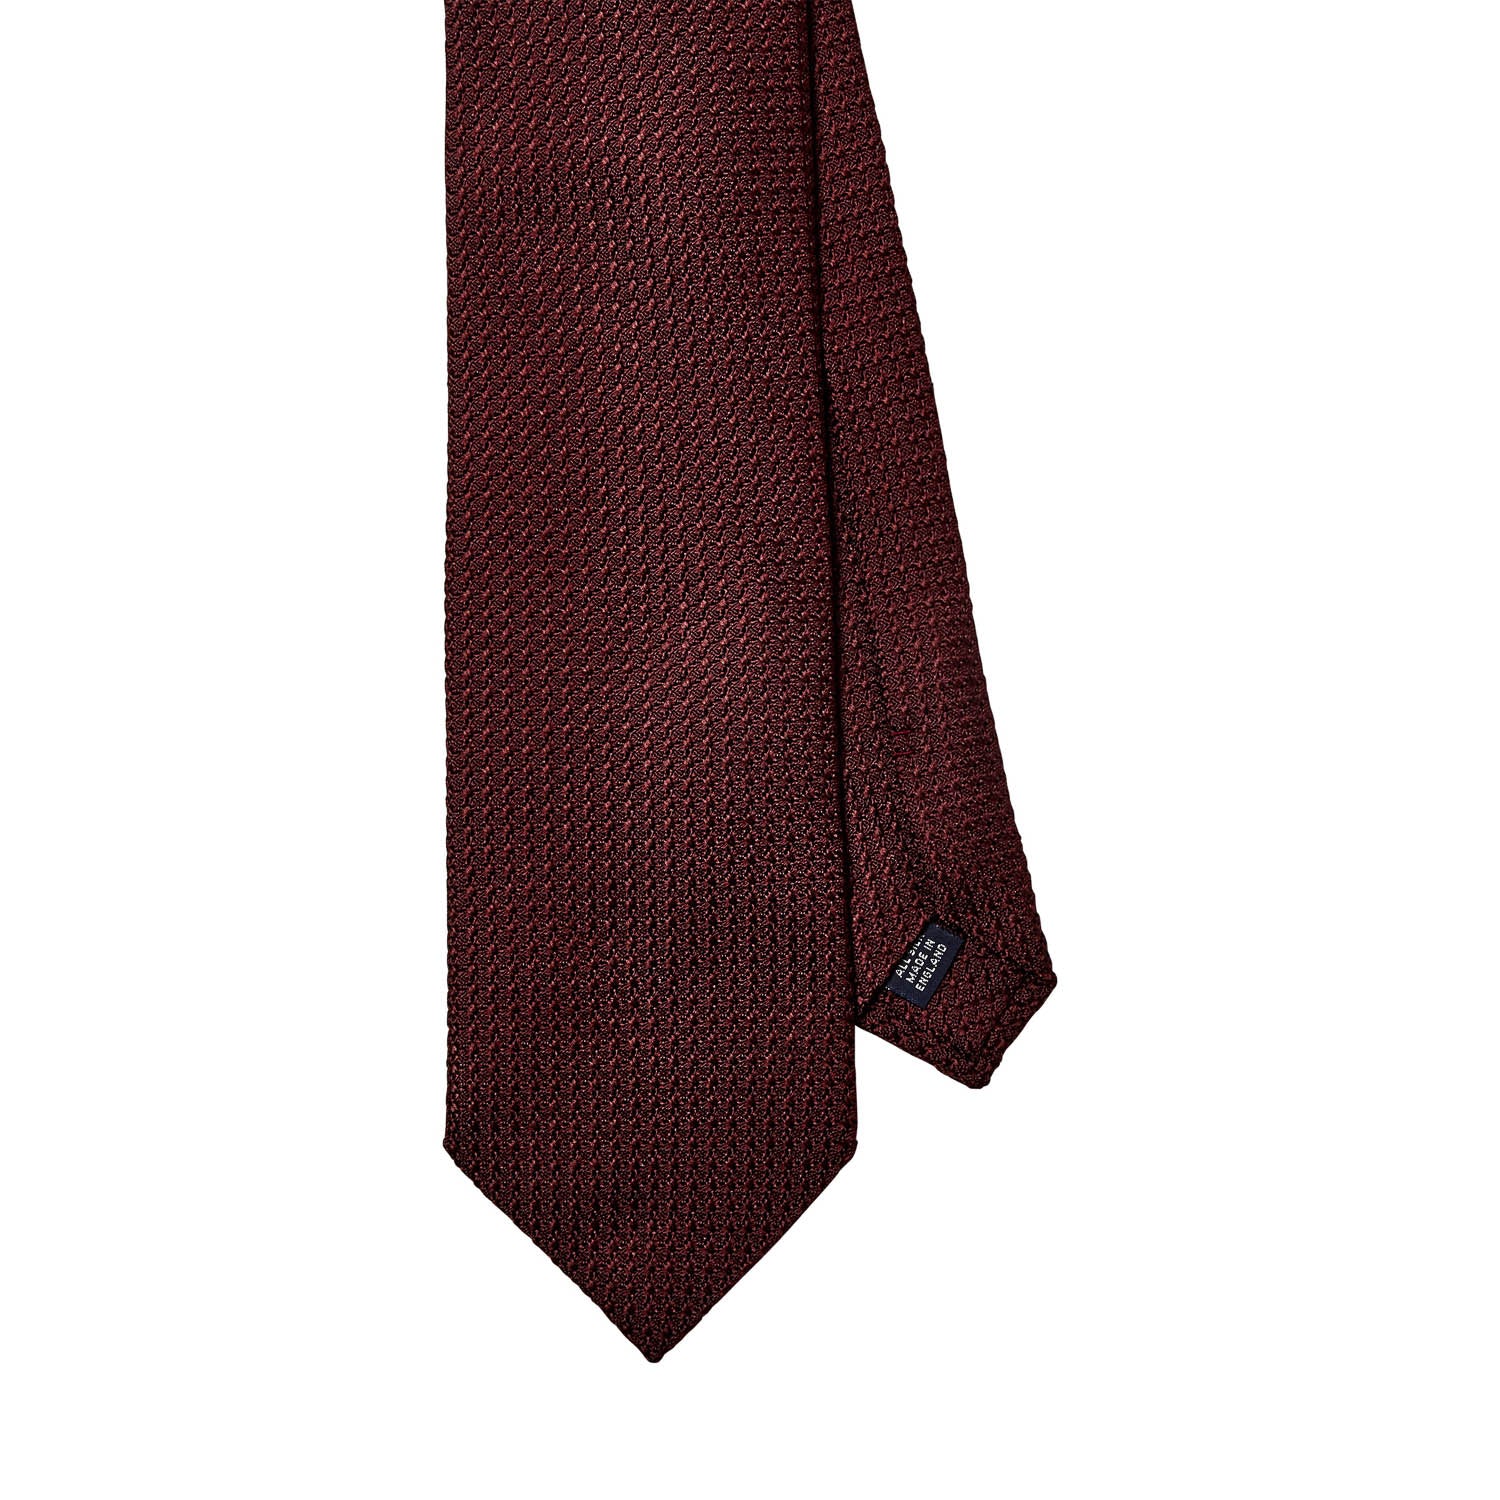 Description: A high-quality, handmade Sovereign Grade Grenadine Grossa Burgundy Tie from KirbyAllison.com on a white background.